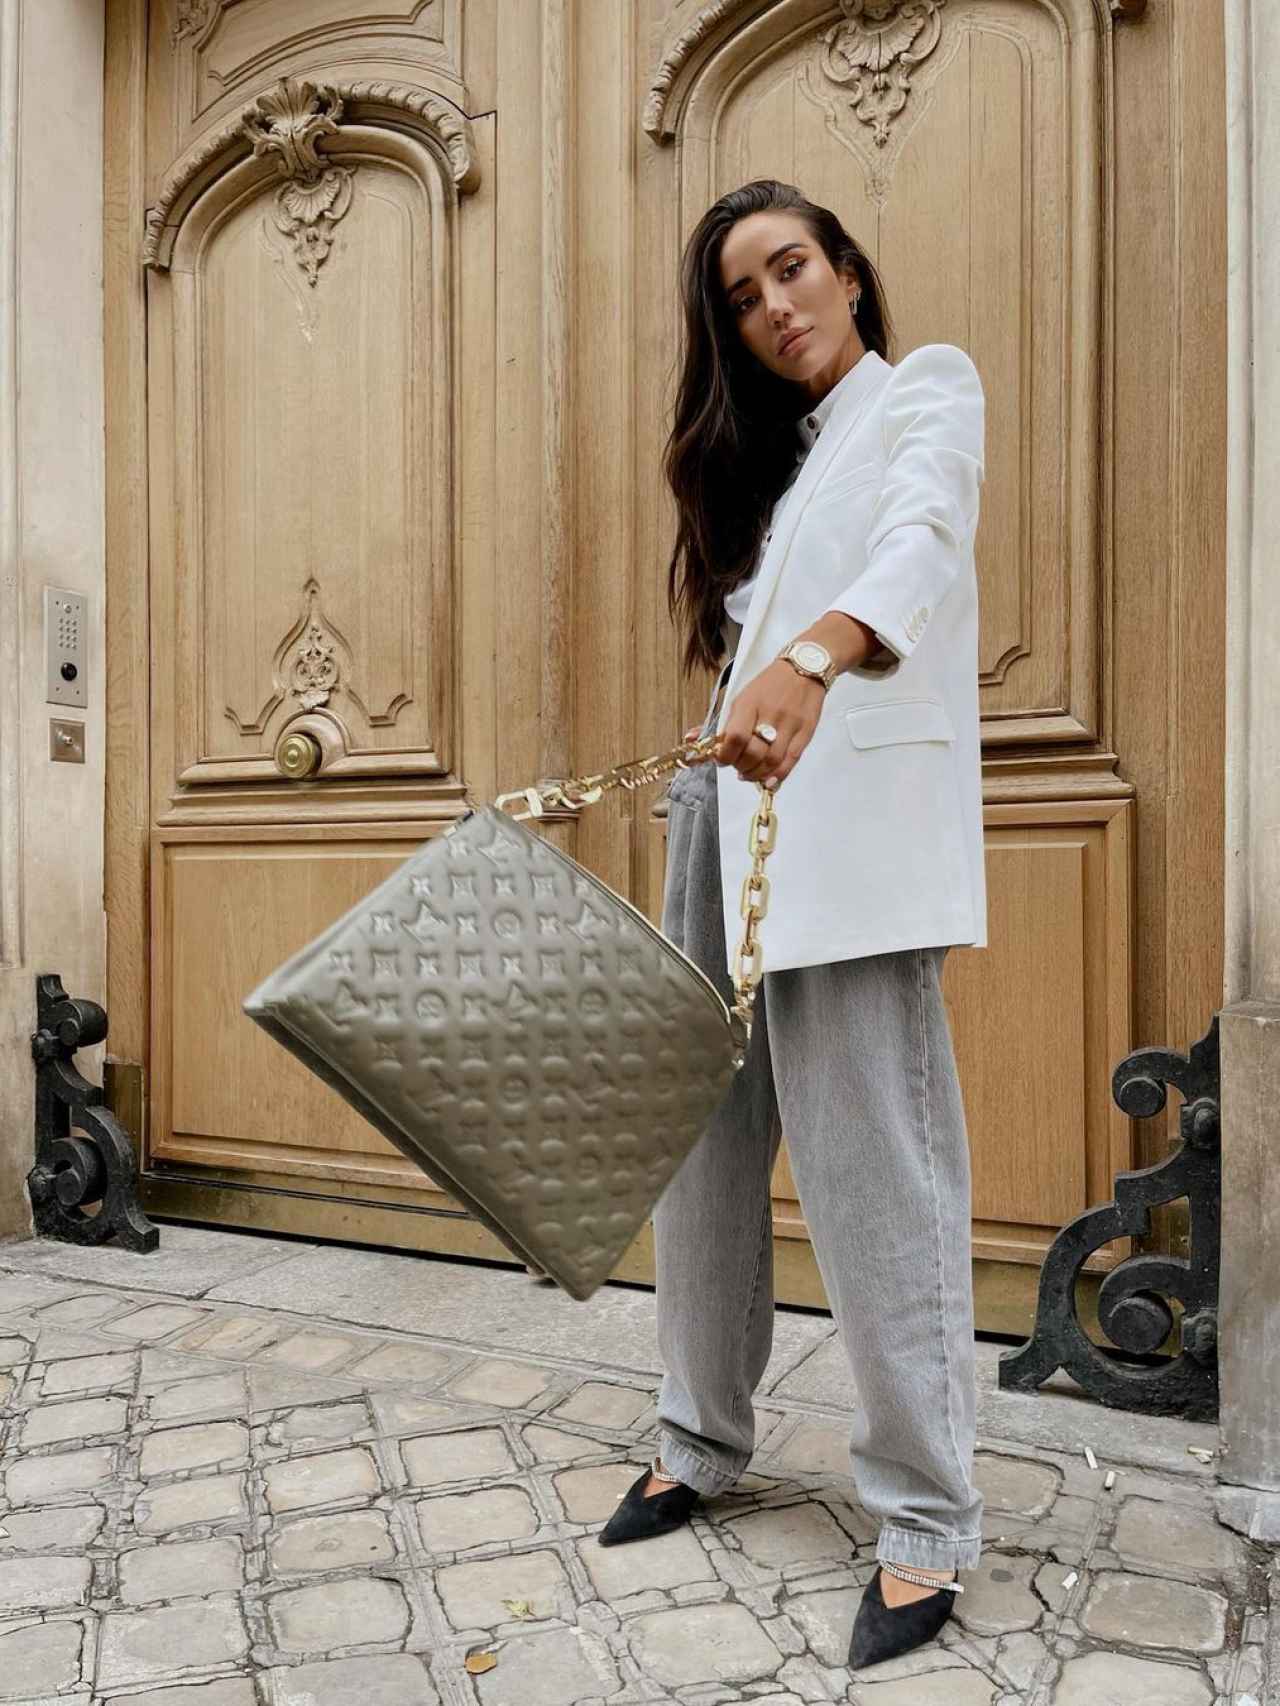 La 'influencer' Tamara Kalinic con el Coussin de Louis Vuitton.